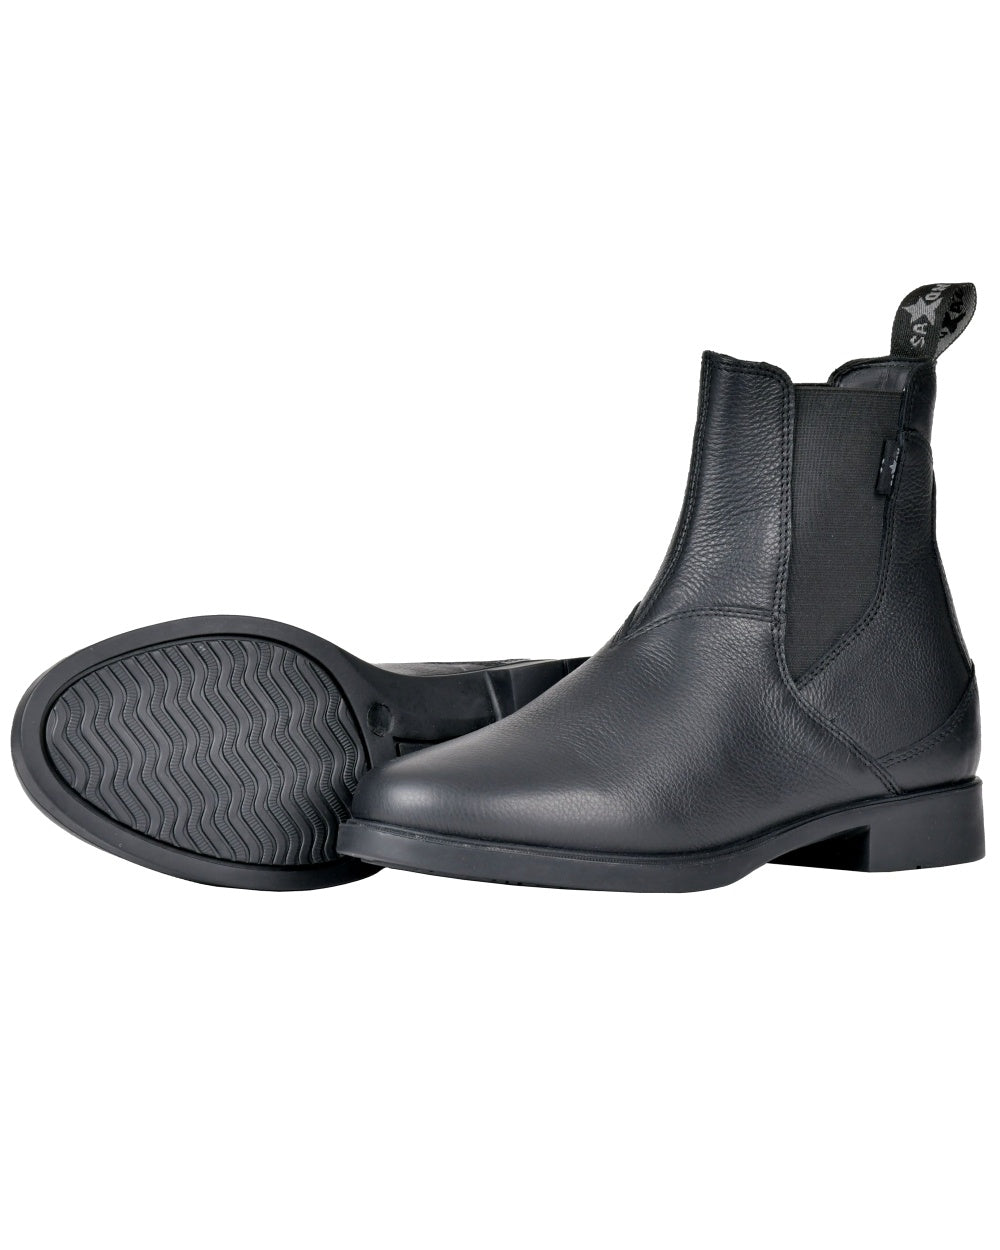 Saxon Allyn Jodhpur Boots in Black 